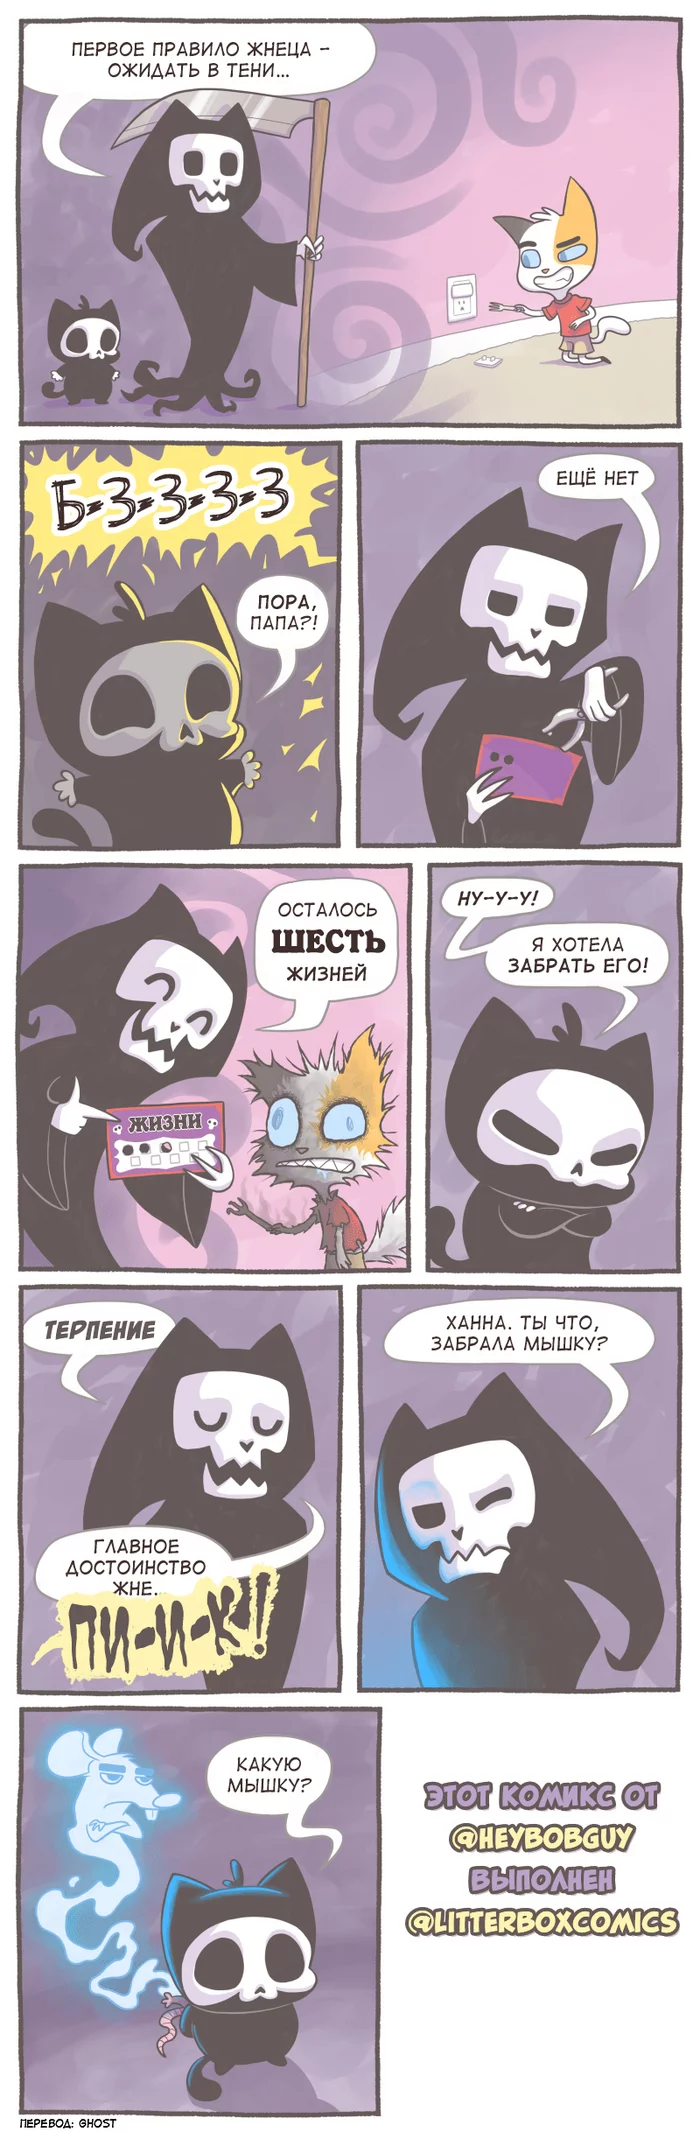 cat reapers - Litterbox Comics, Humor, Comics, Translated by myself, Translation, Parents and children, cat, Heybobguy, The Grim Reaper, Nine lives, Longpost